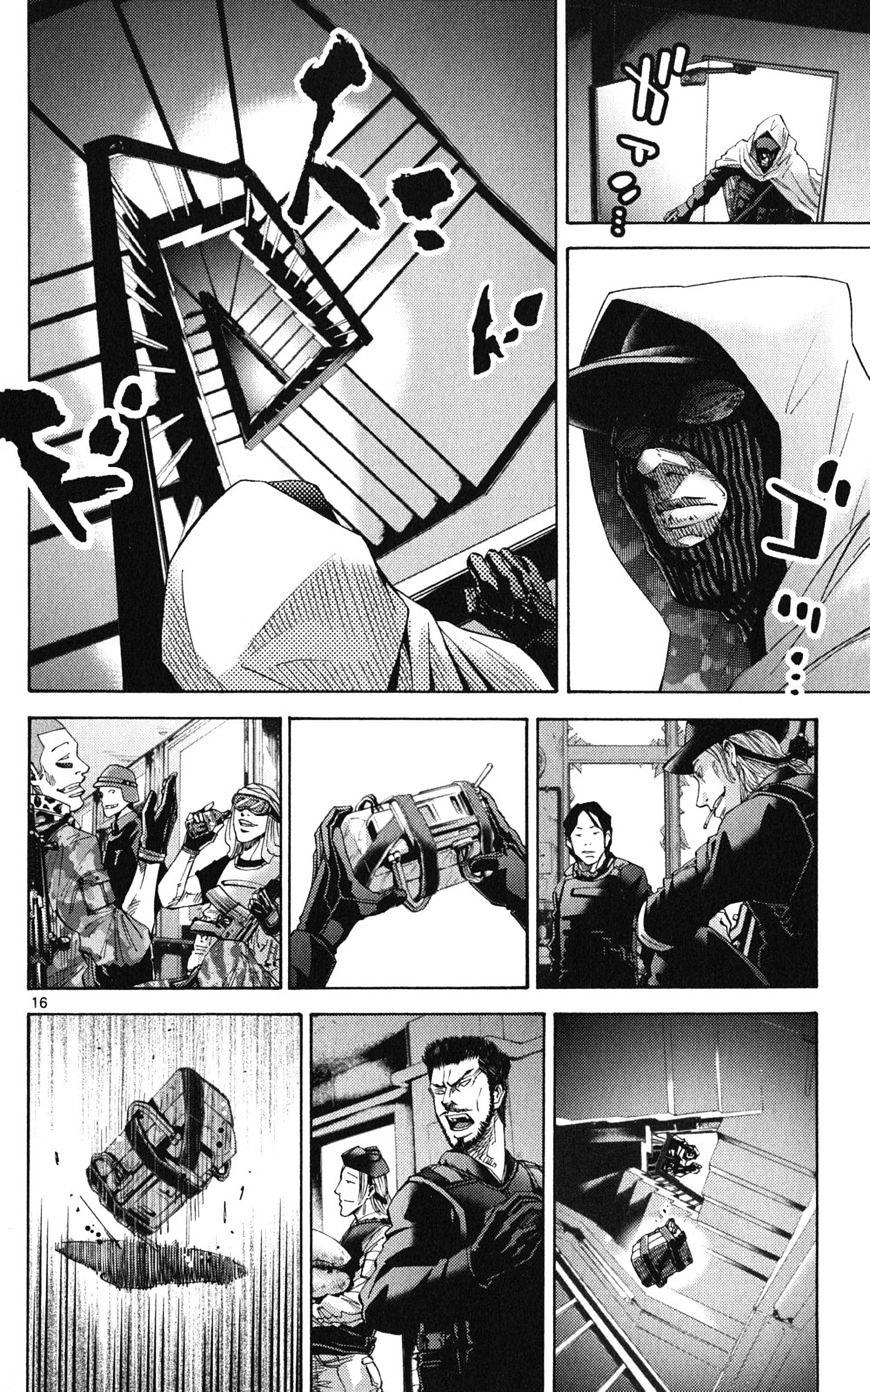 Imawa No Kuni No Alice Chapter 49.1 : Side Story 5 - King Of Spades (1) page 14 - Mangakakalot